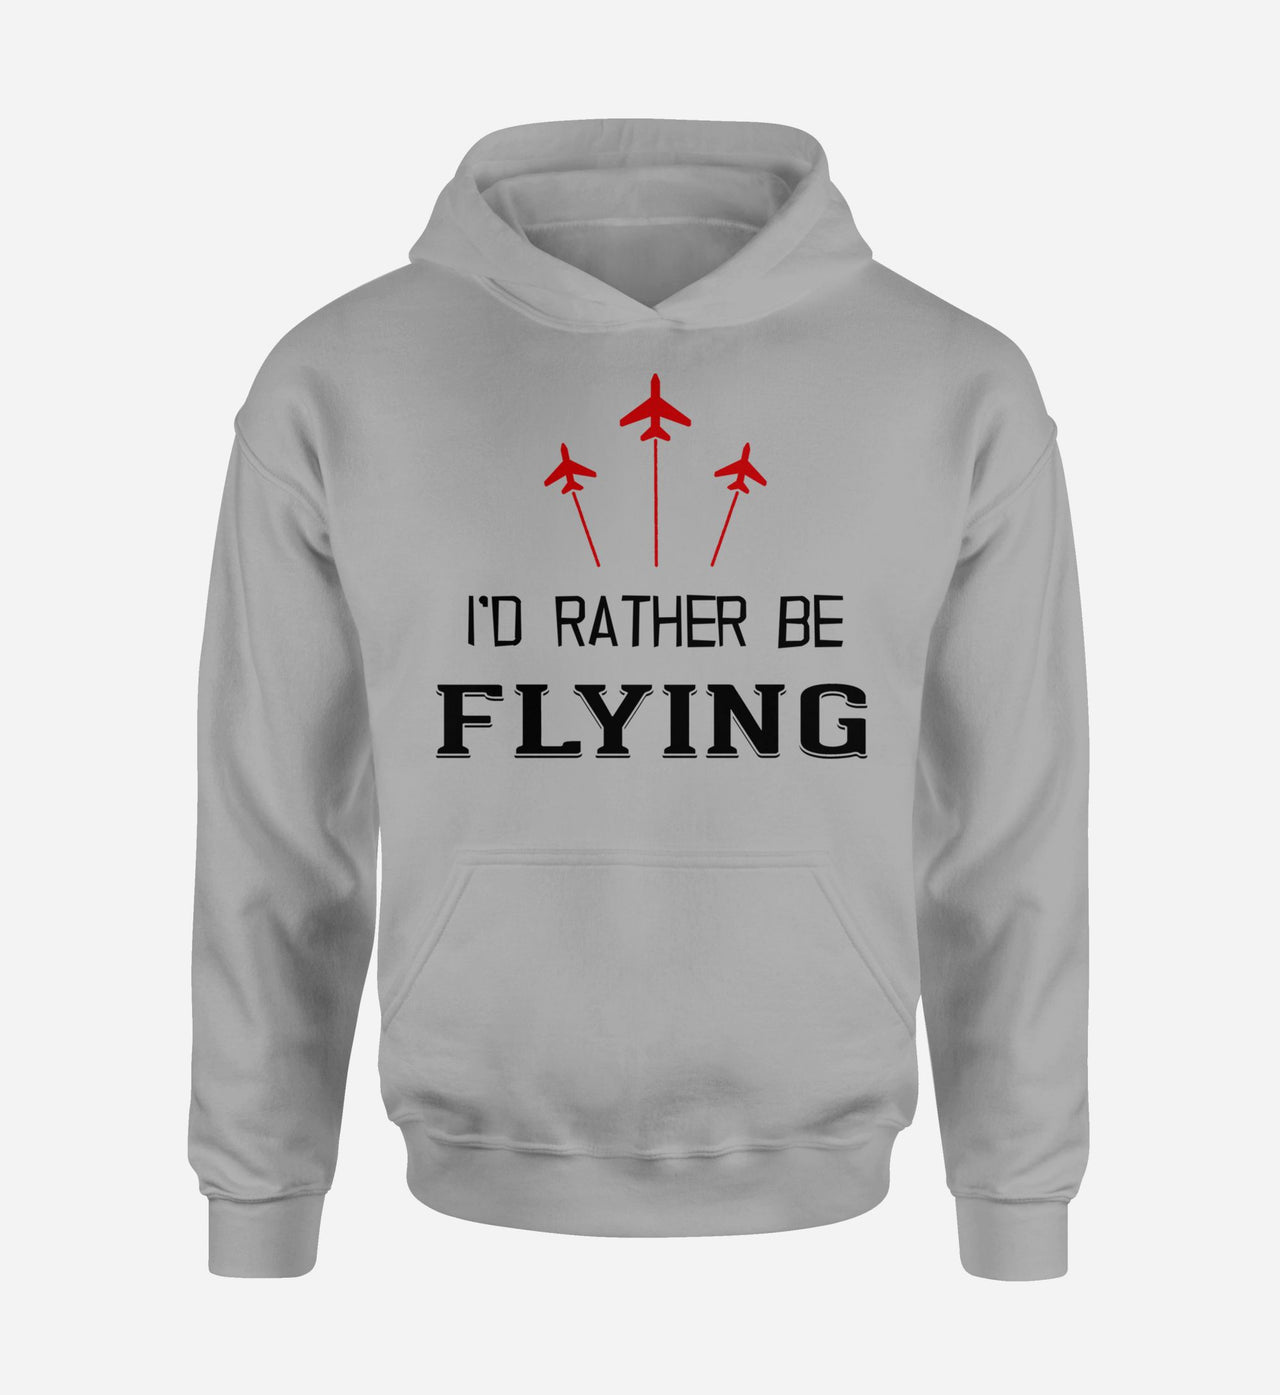 I'D Rather Be Flying Designed Hoodies